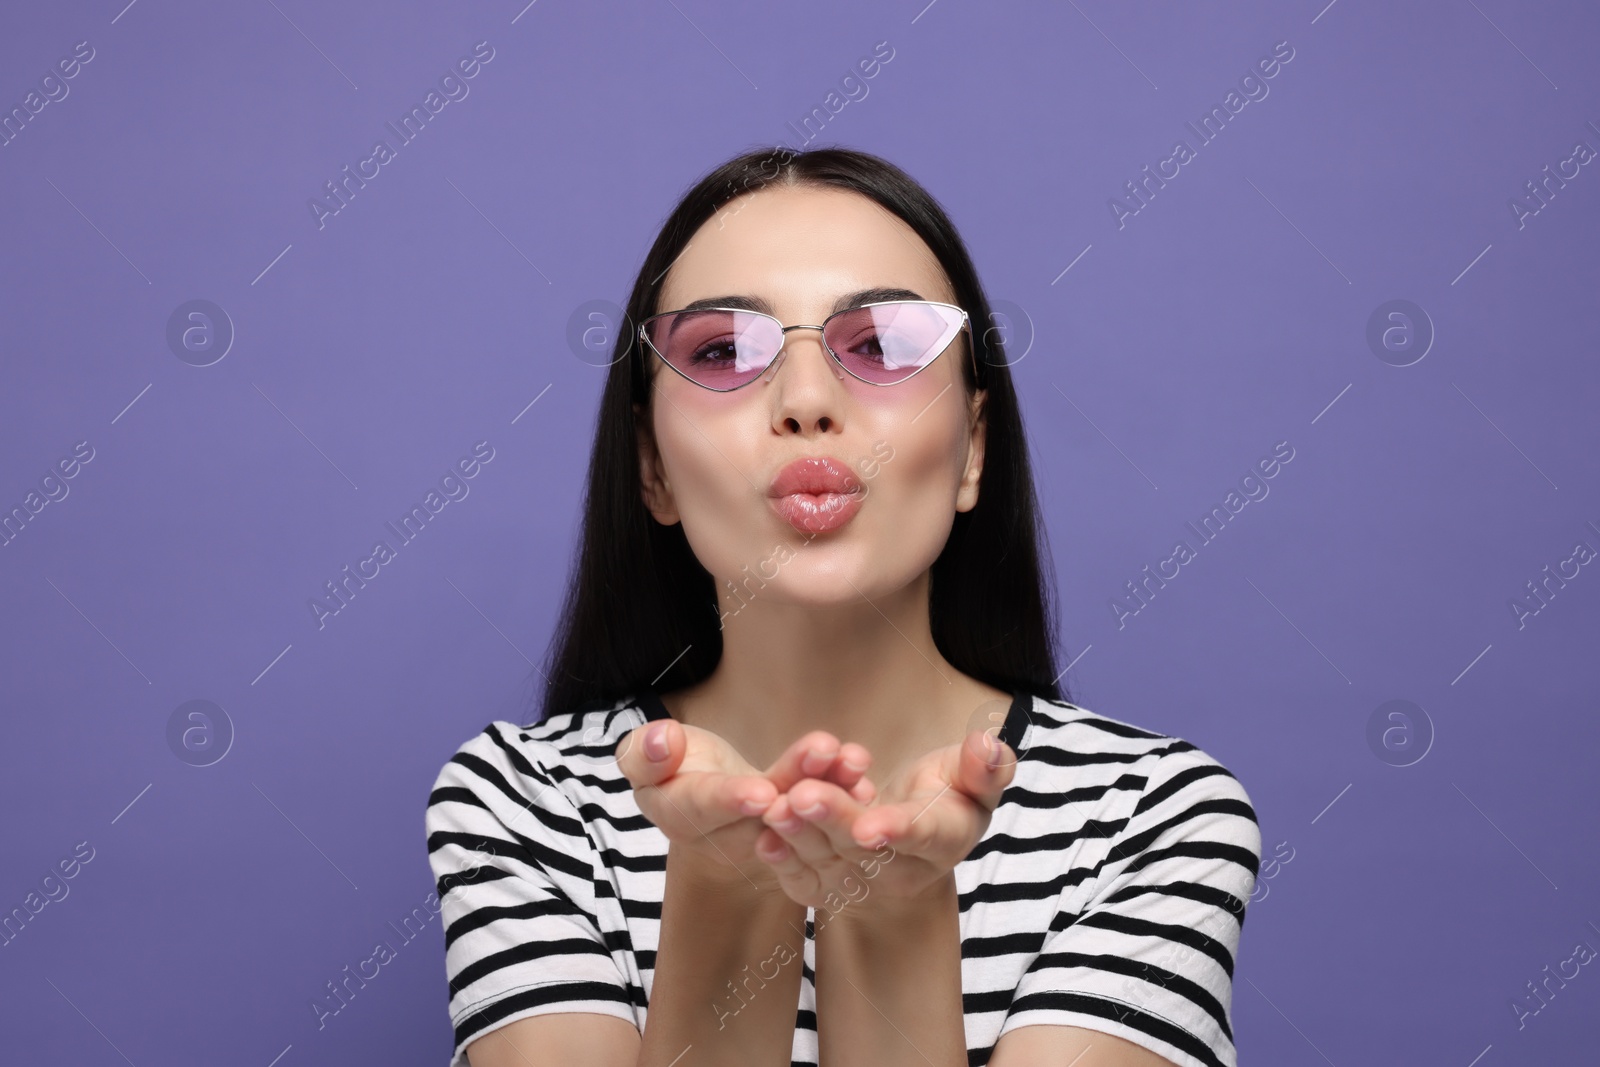 Photo of Beautiful young woman in stylish sunglasses blowing kiss on purple background